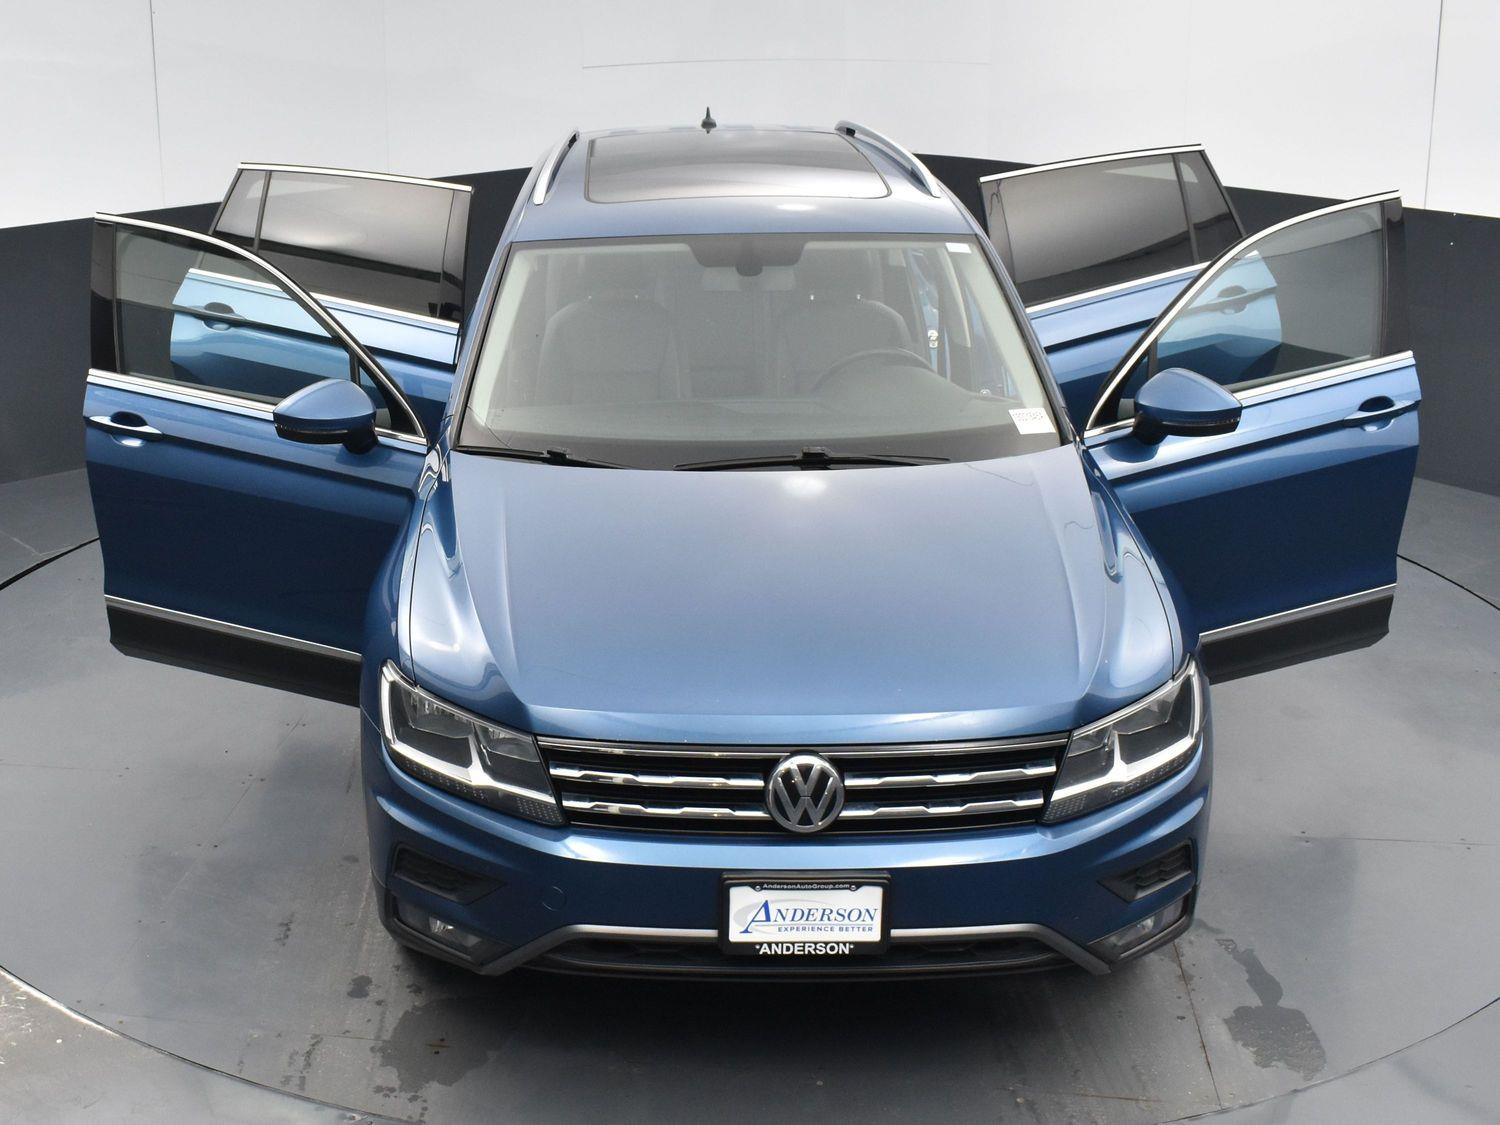 Used 2018 Volkswagen Tiguan SEL 4motion for sale in Grand Island NE